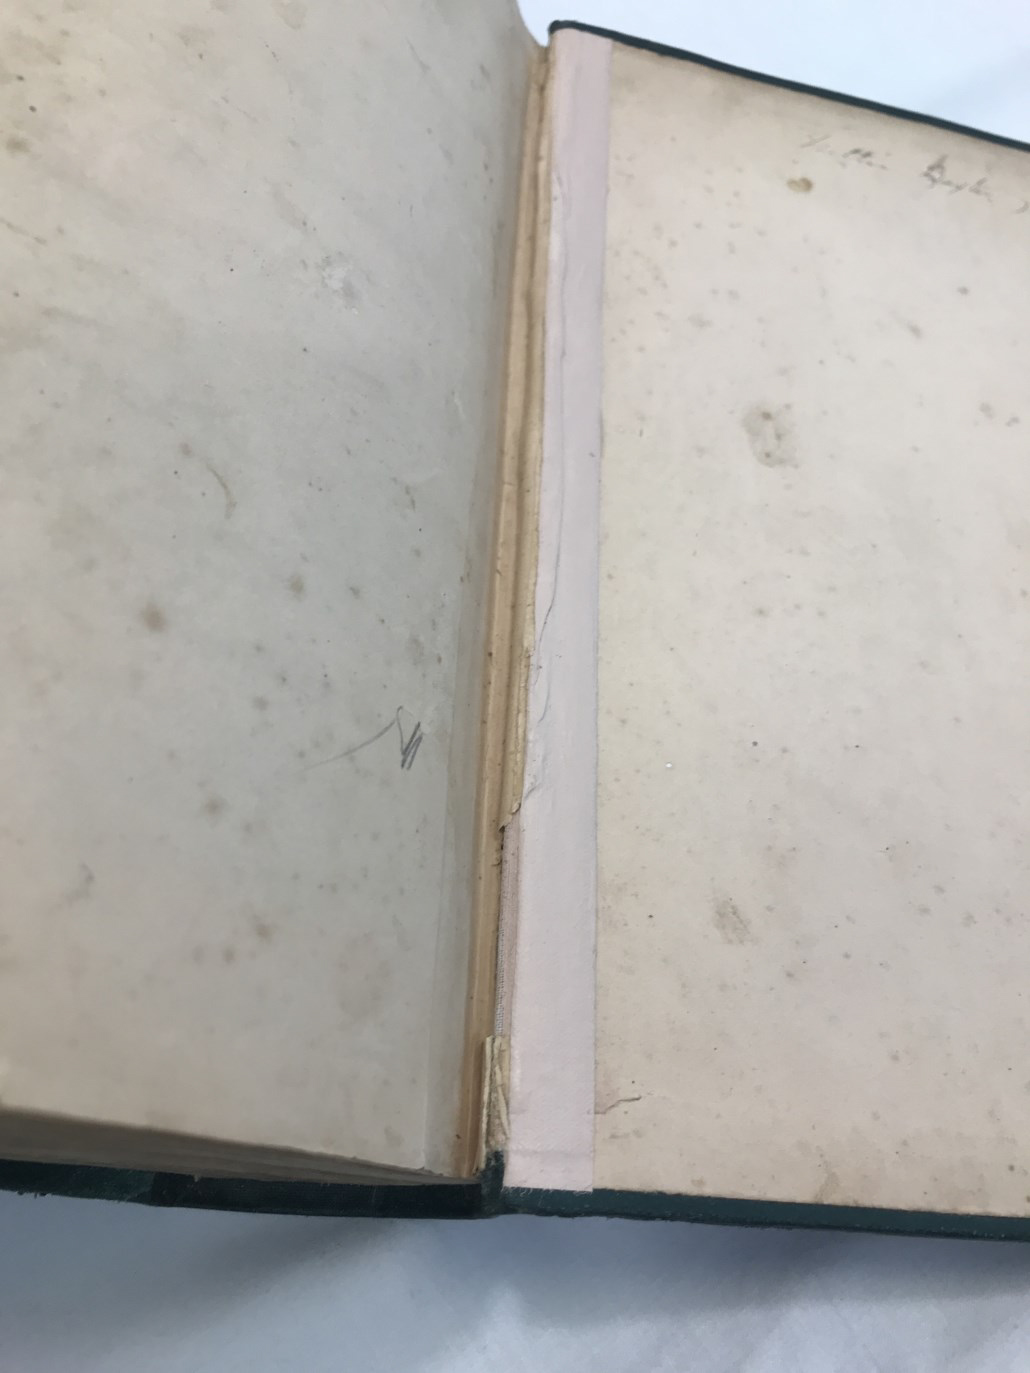 repair needed to hinge of book